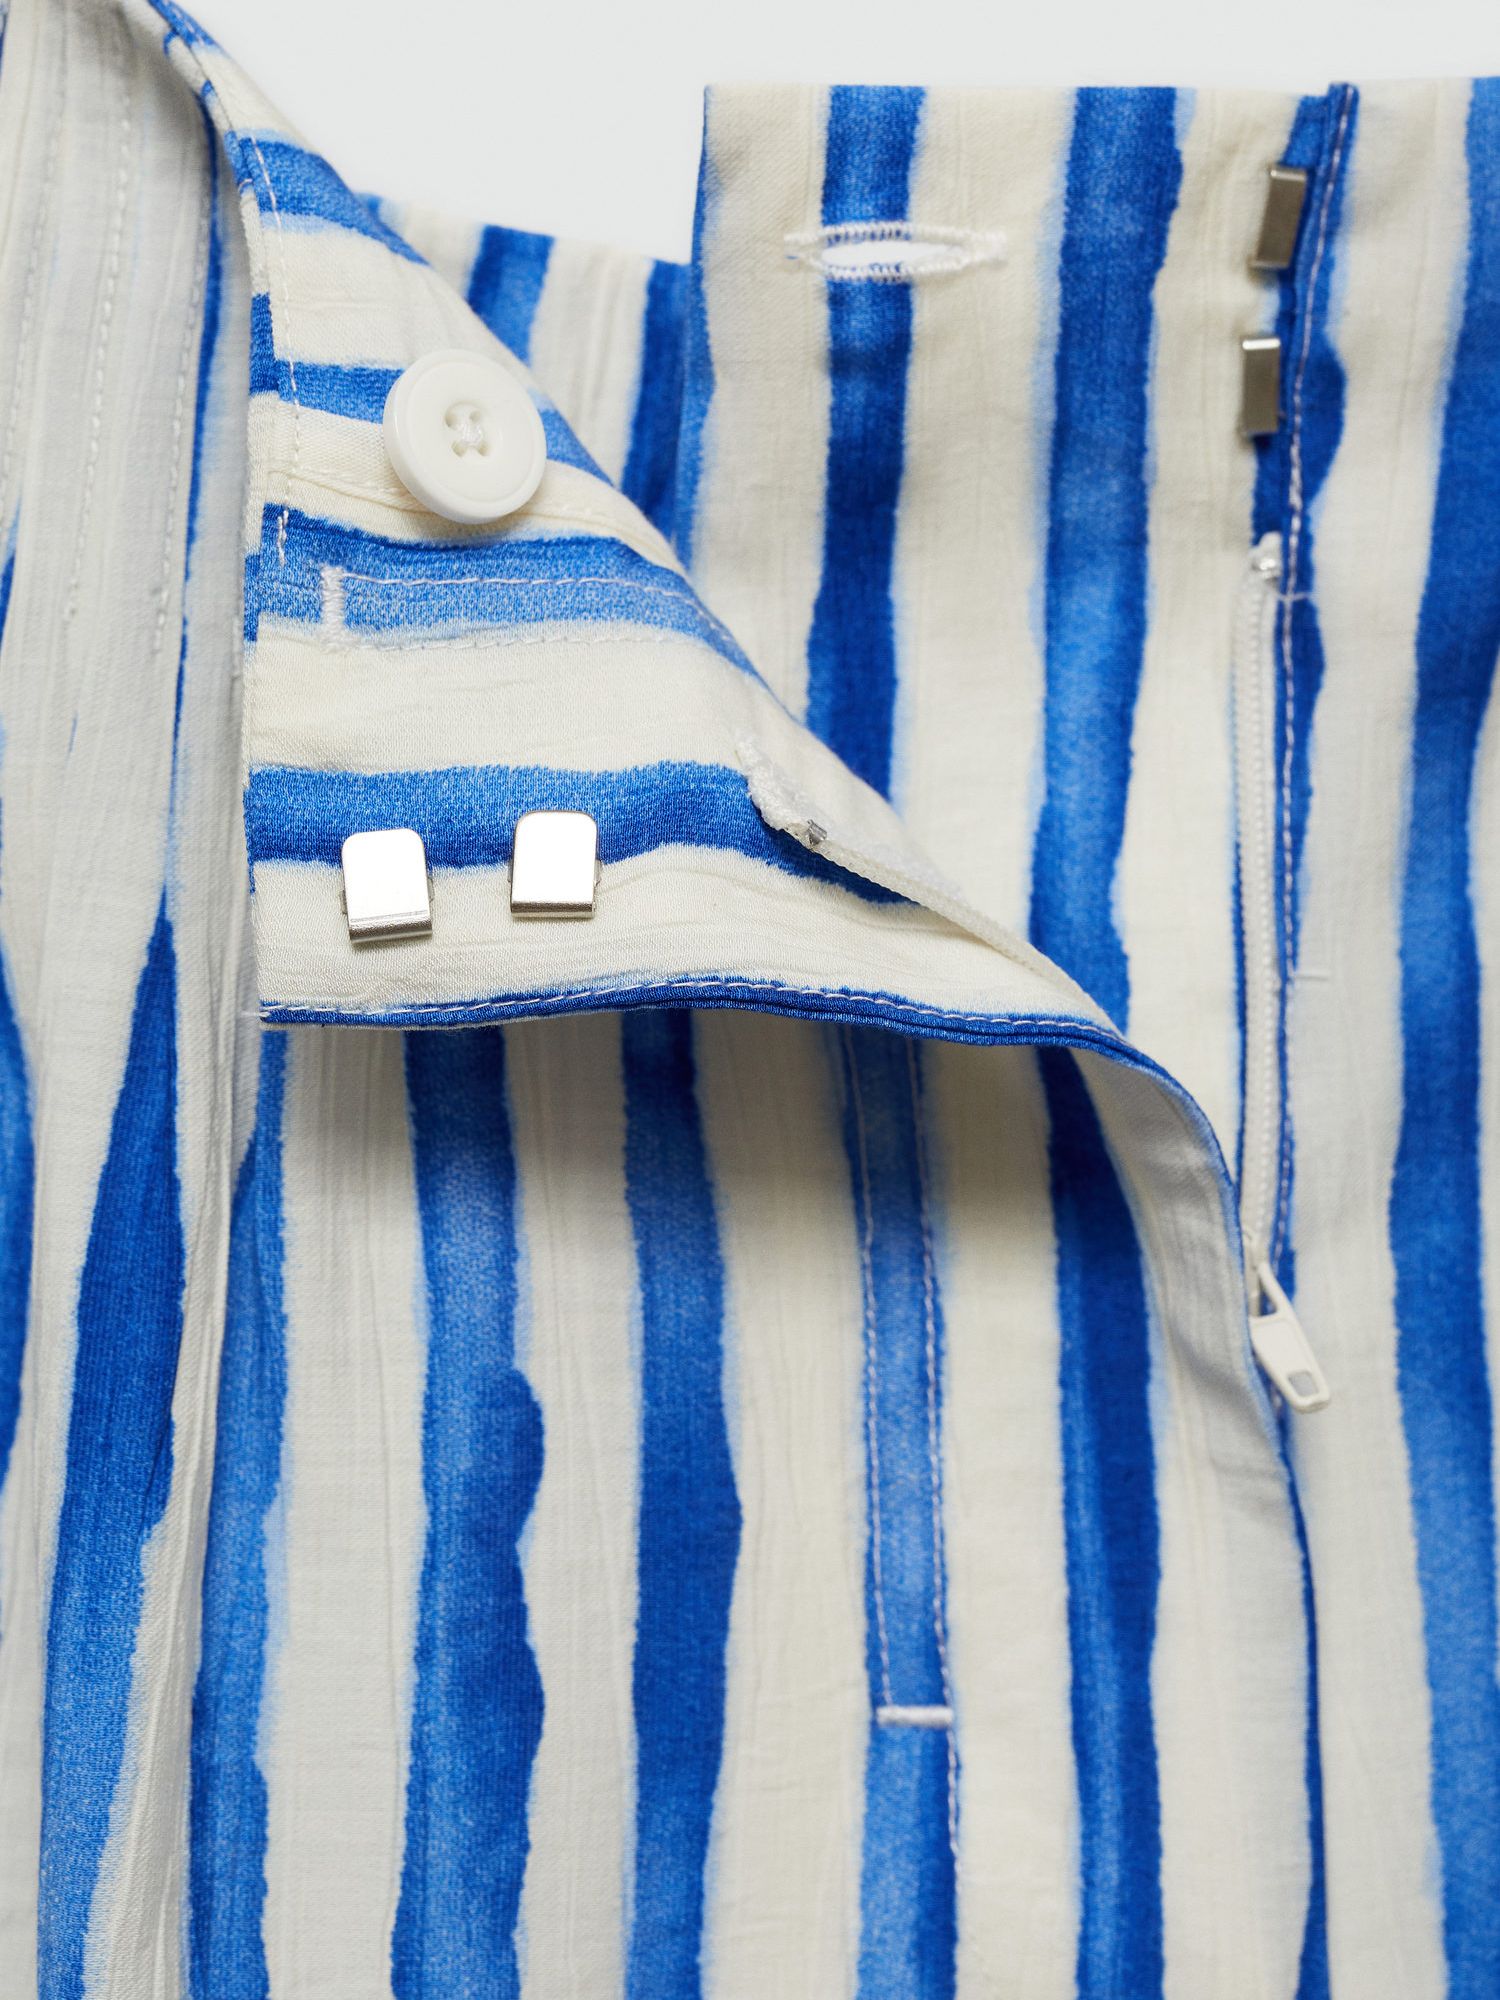 Mango Brenda Striped High Waist Shorts, White/Blue, L